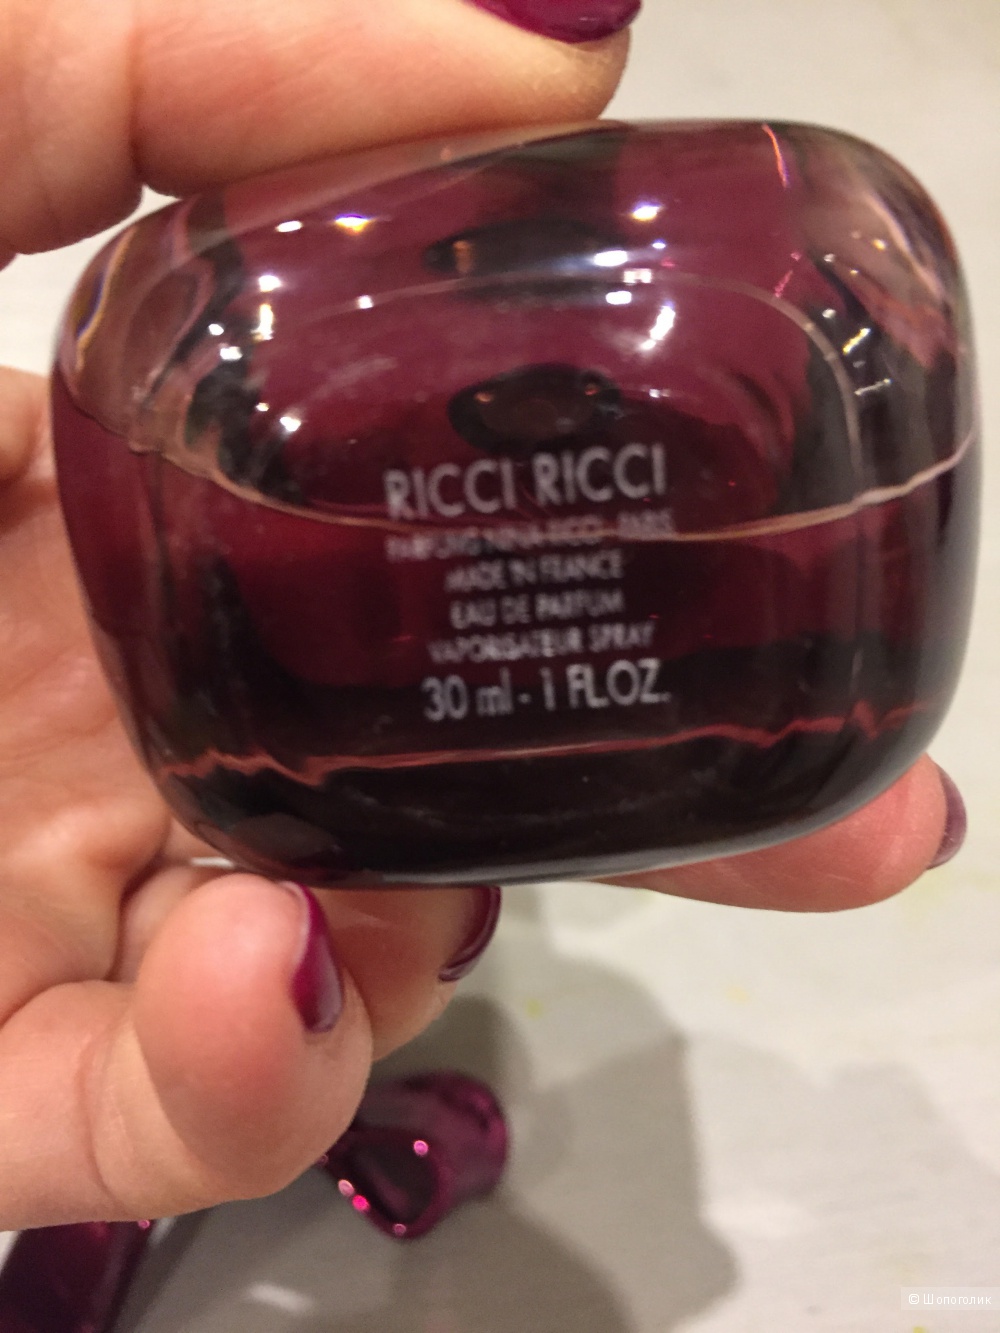 Парфюмированная вода Nina Ricci "Ricci Ricci" 30 мл почти полный флакон.